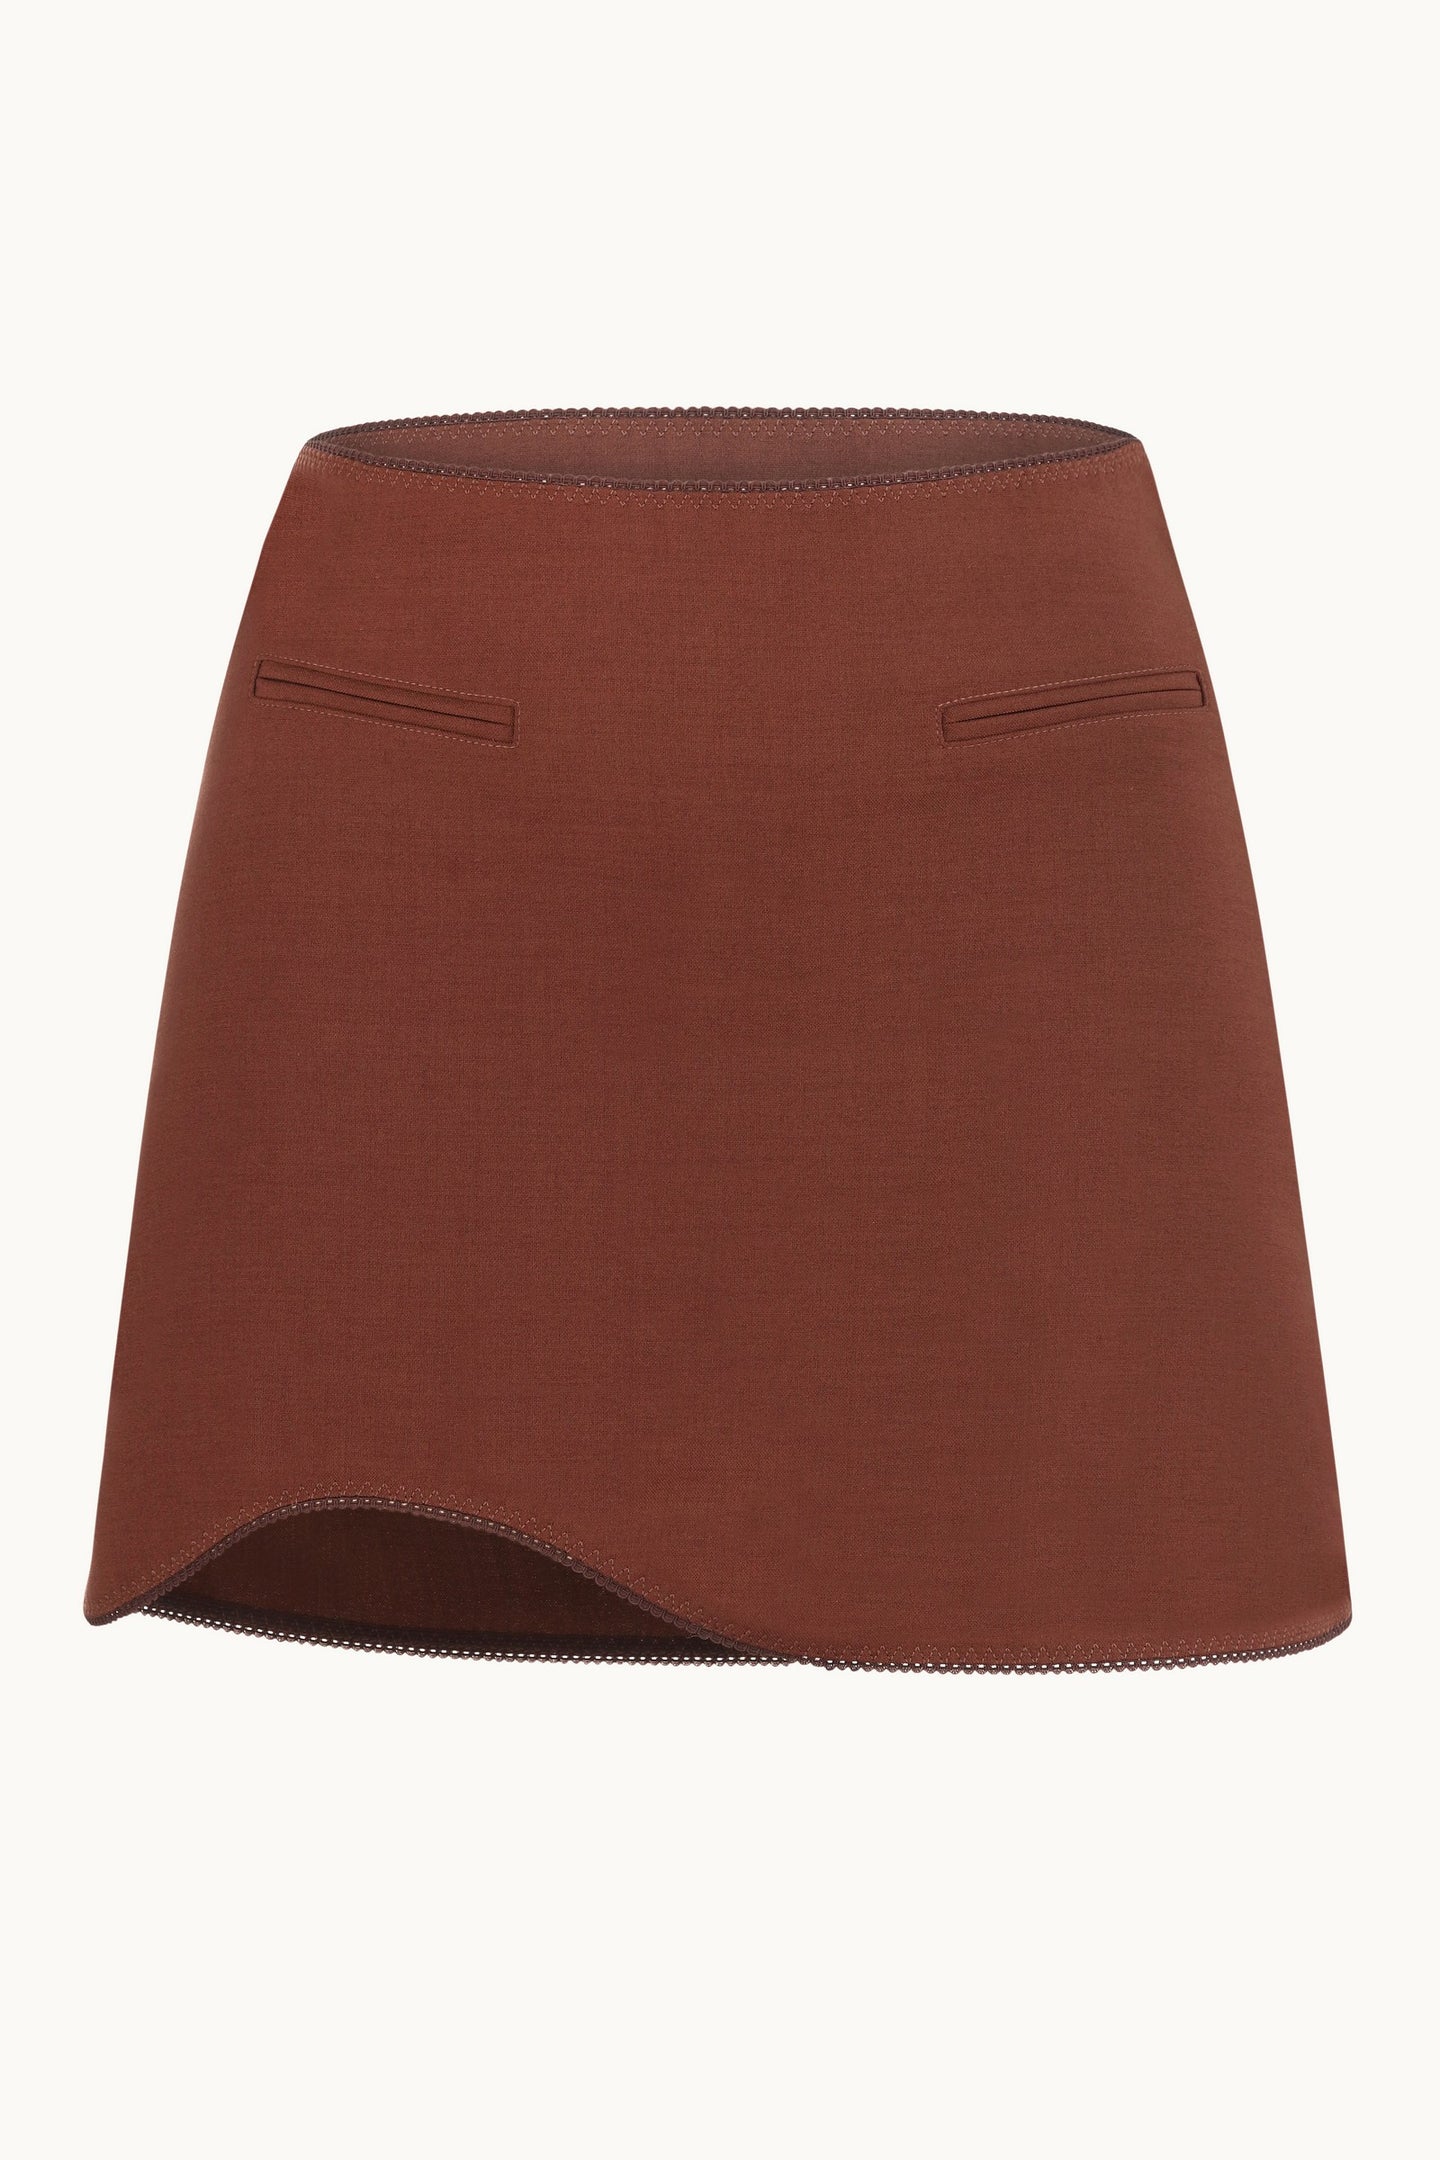 Anaïs brown skirt front view